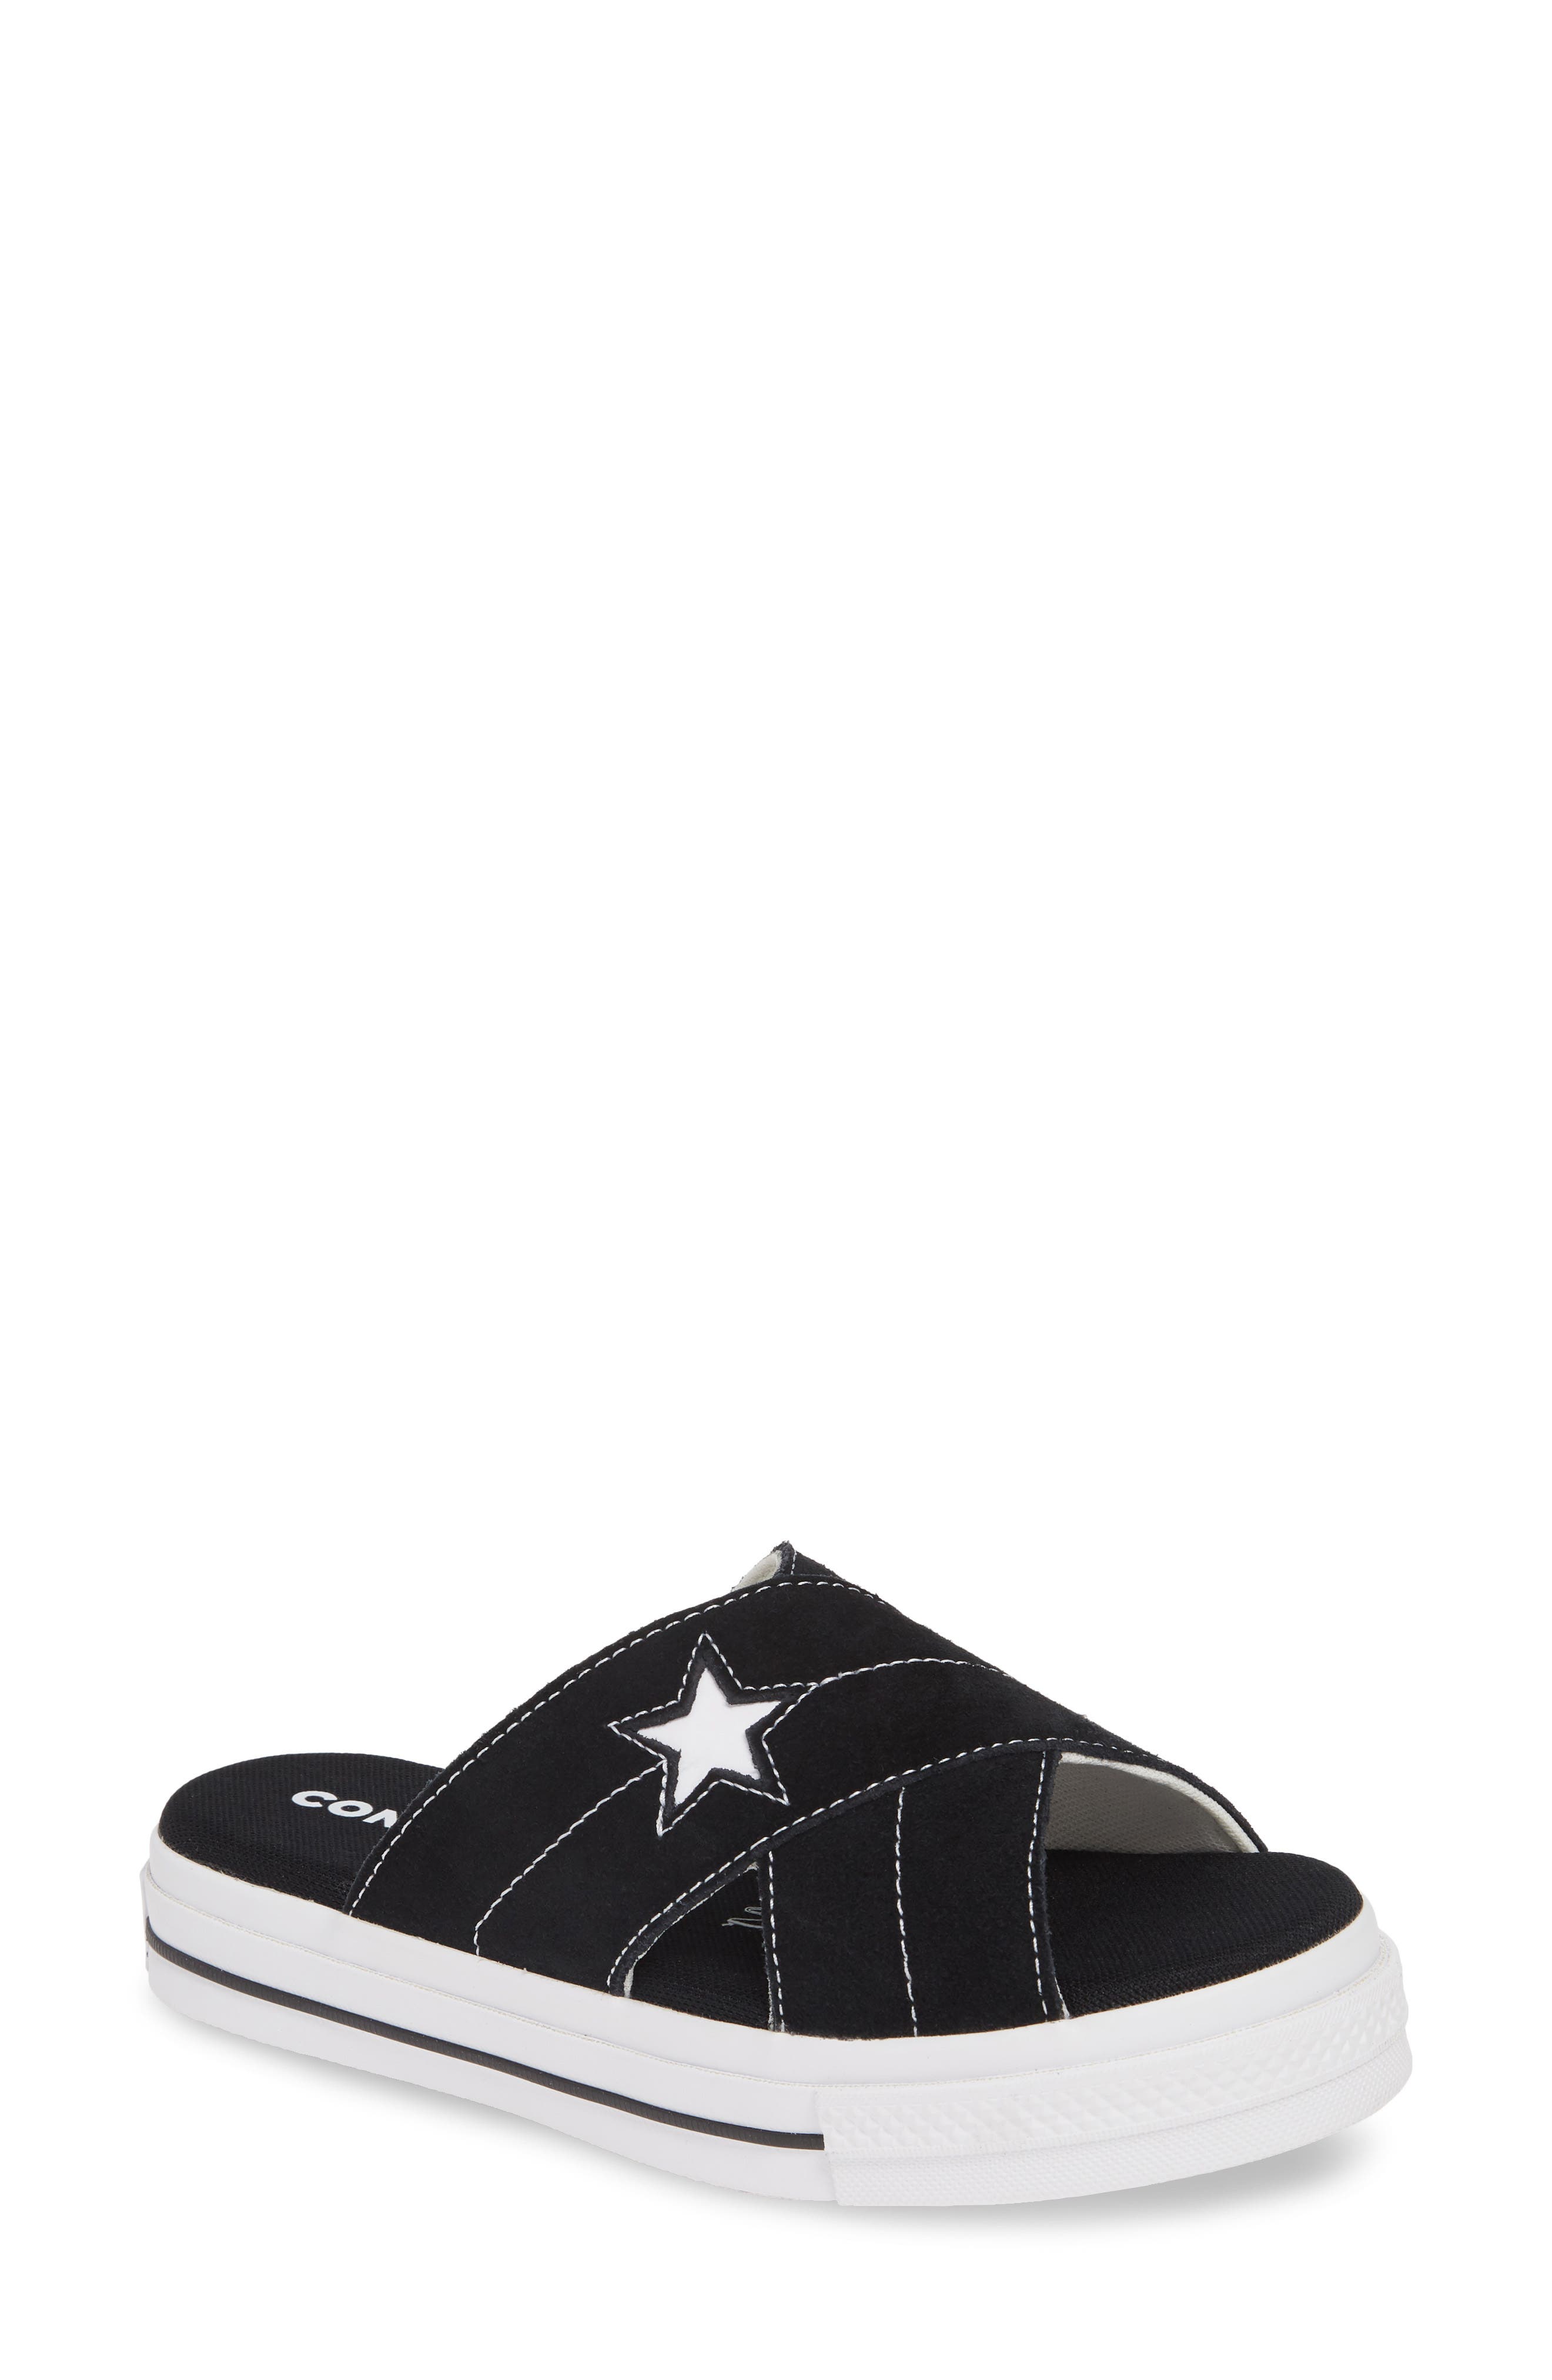 one star converse sandals